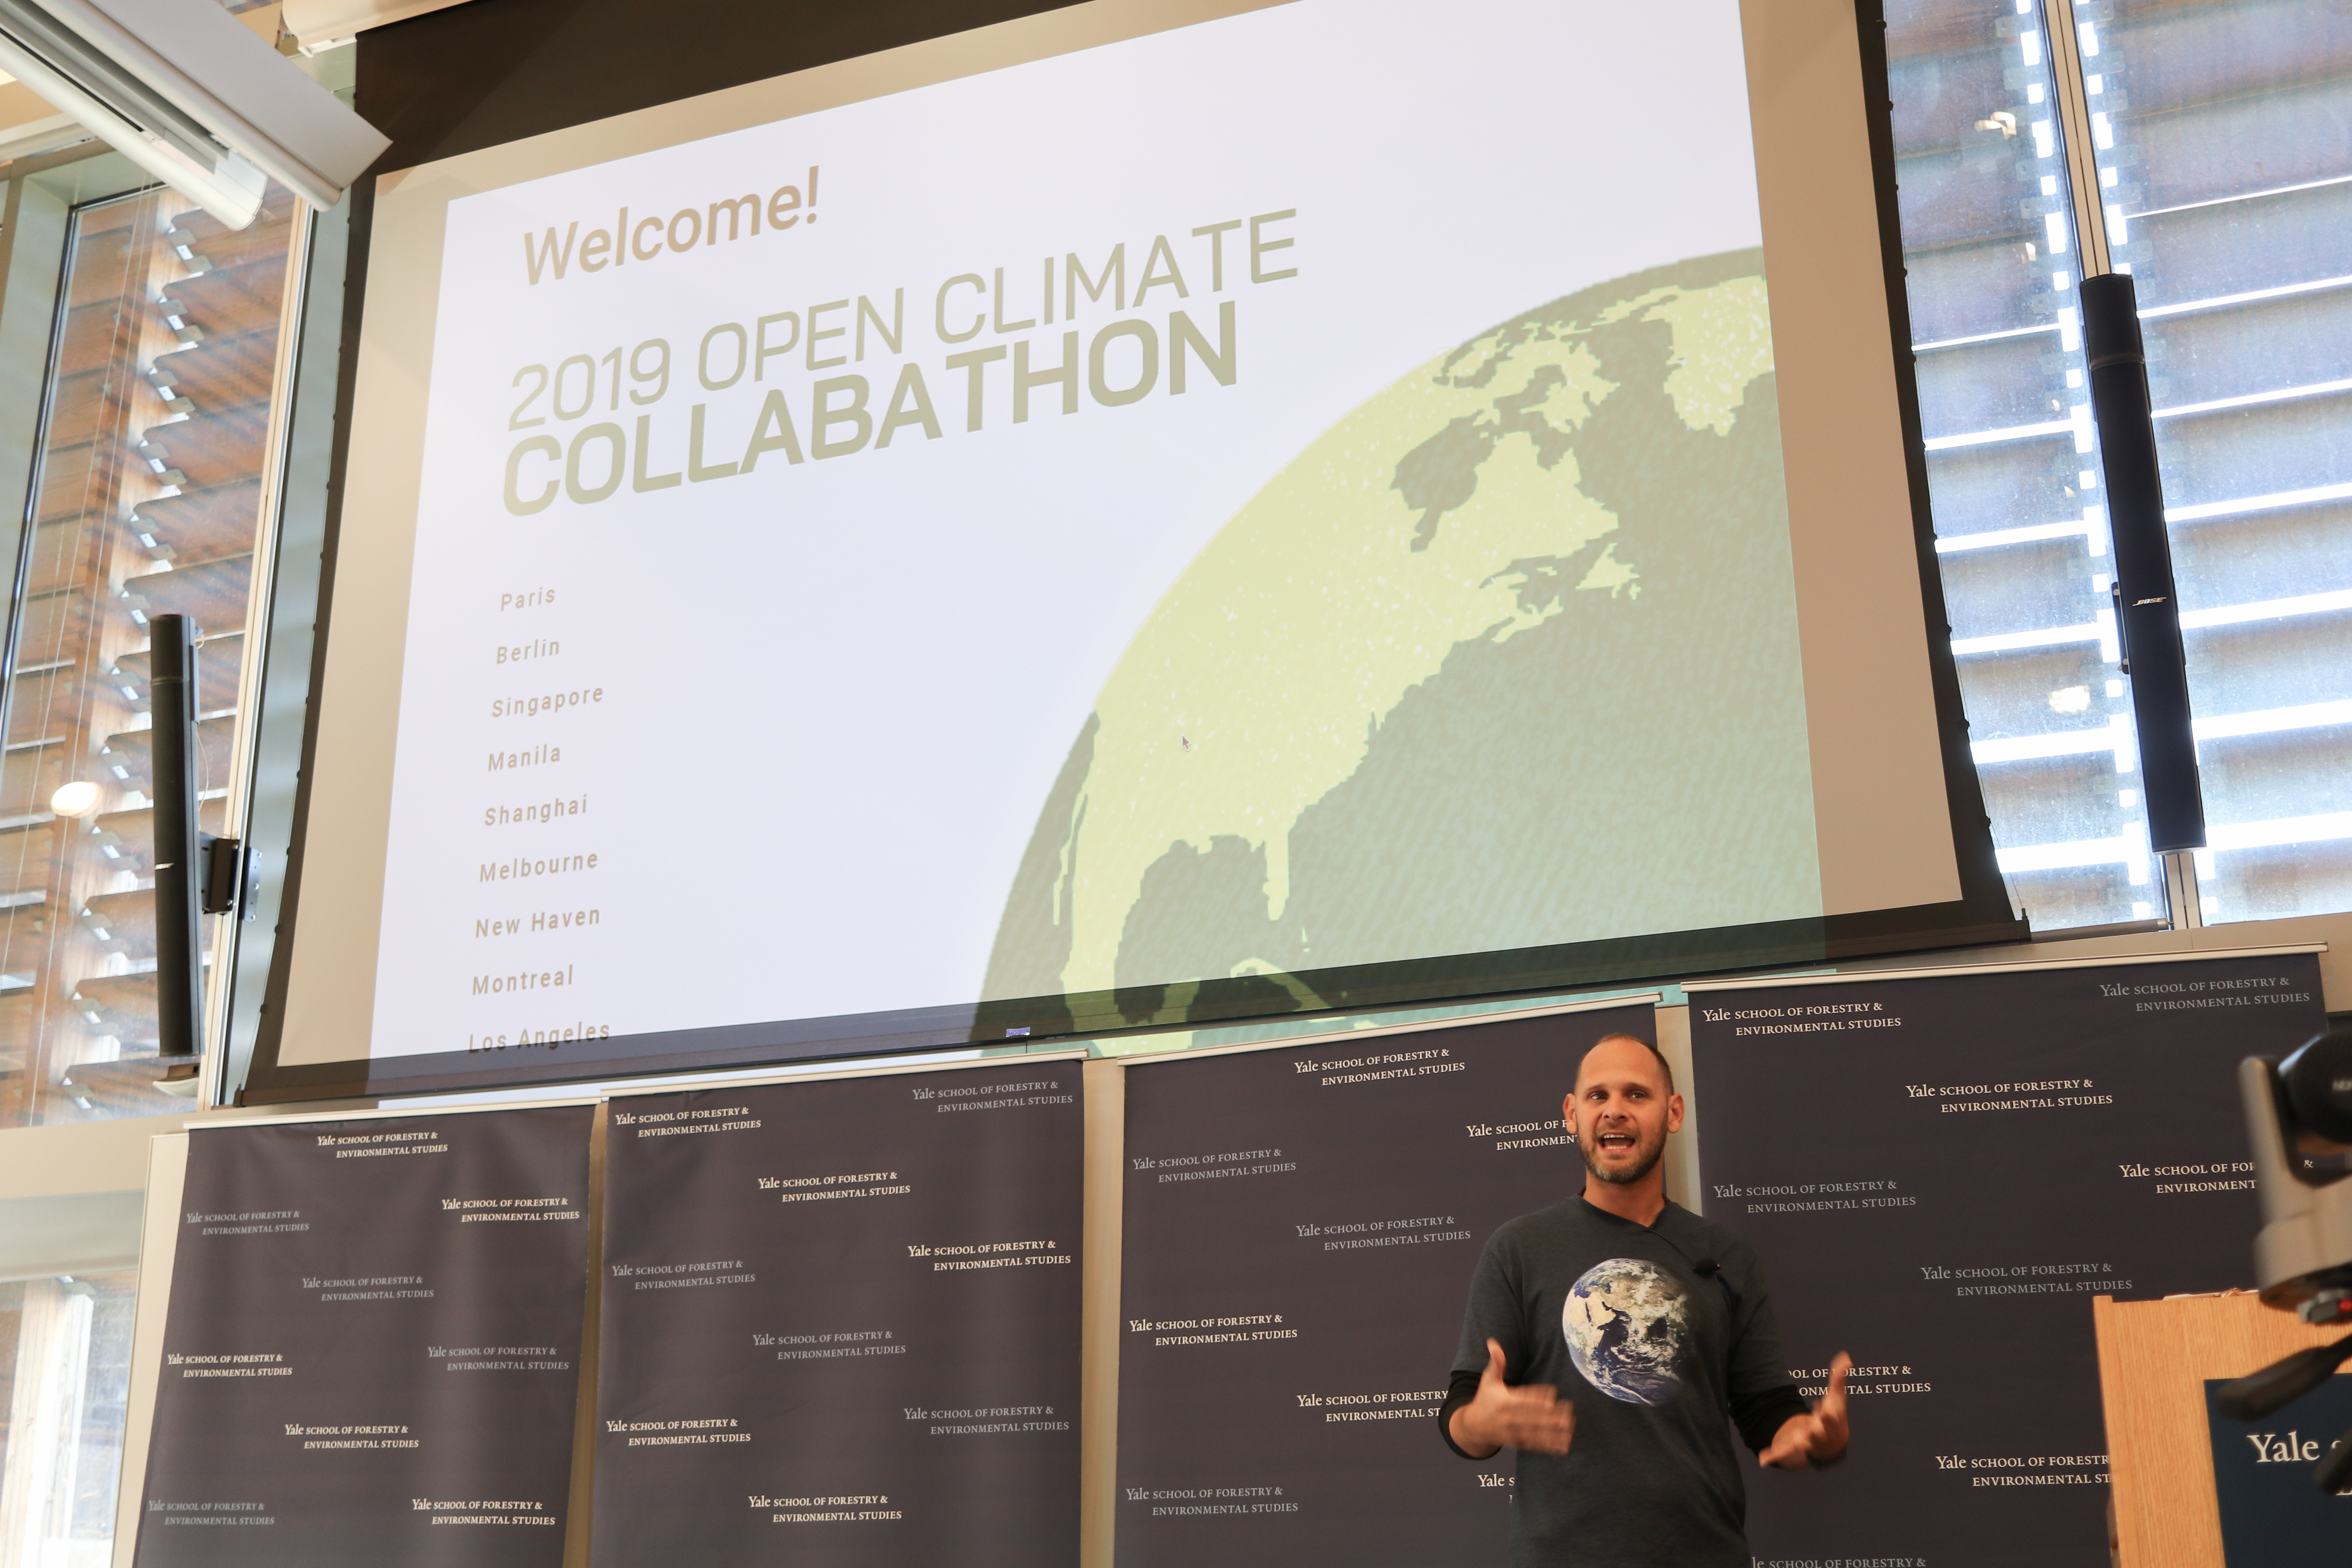 Martin Wainstein speaks at Open Climate Collabathon event